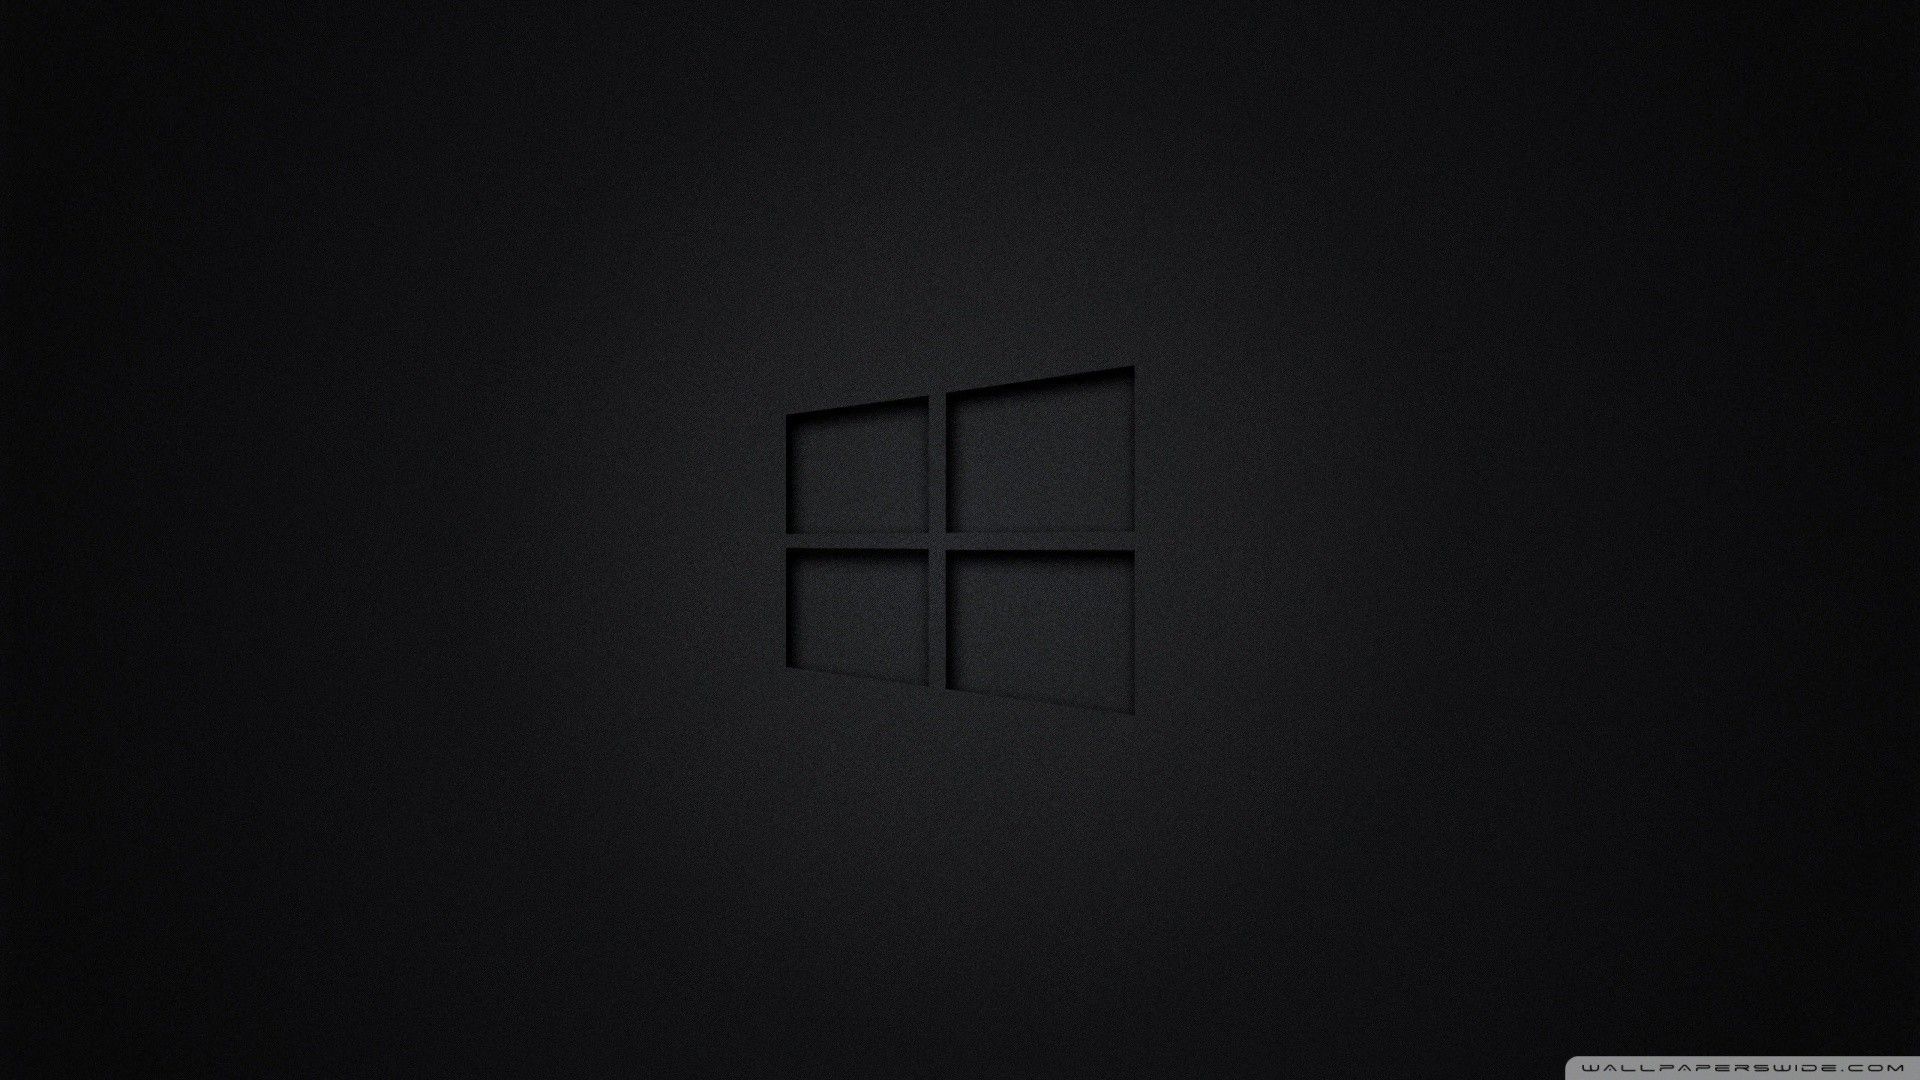 Black Windows 10 Hd Wallpapers On Wallpaperdog